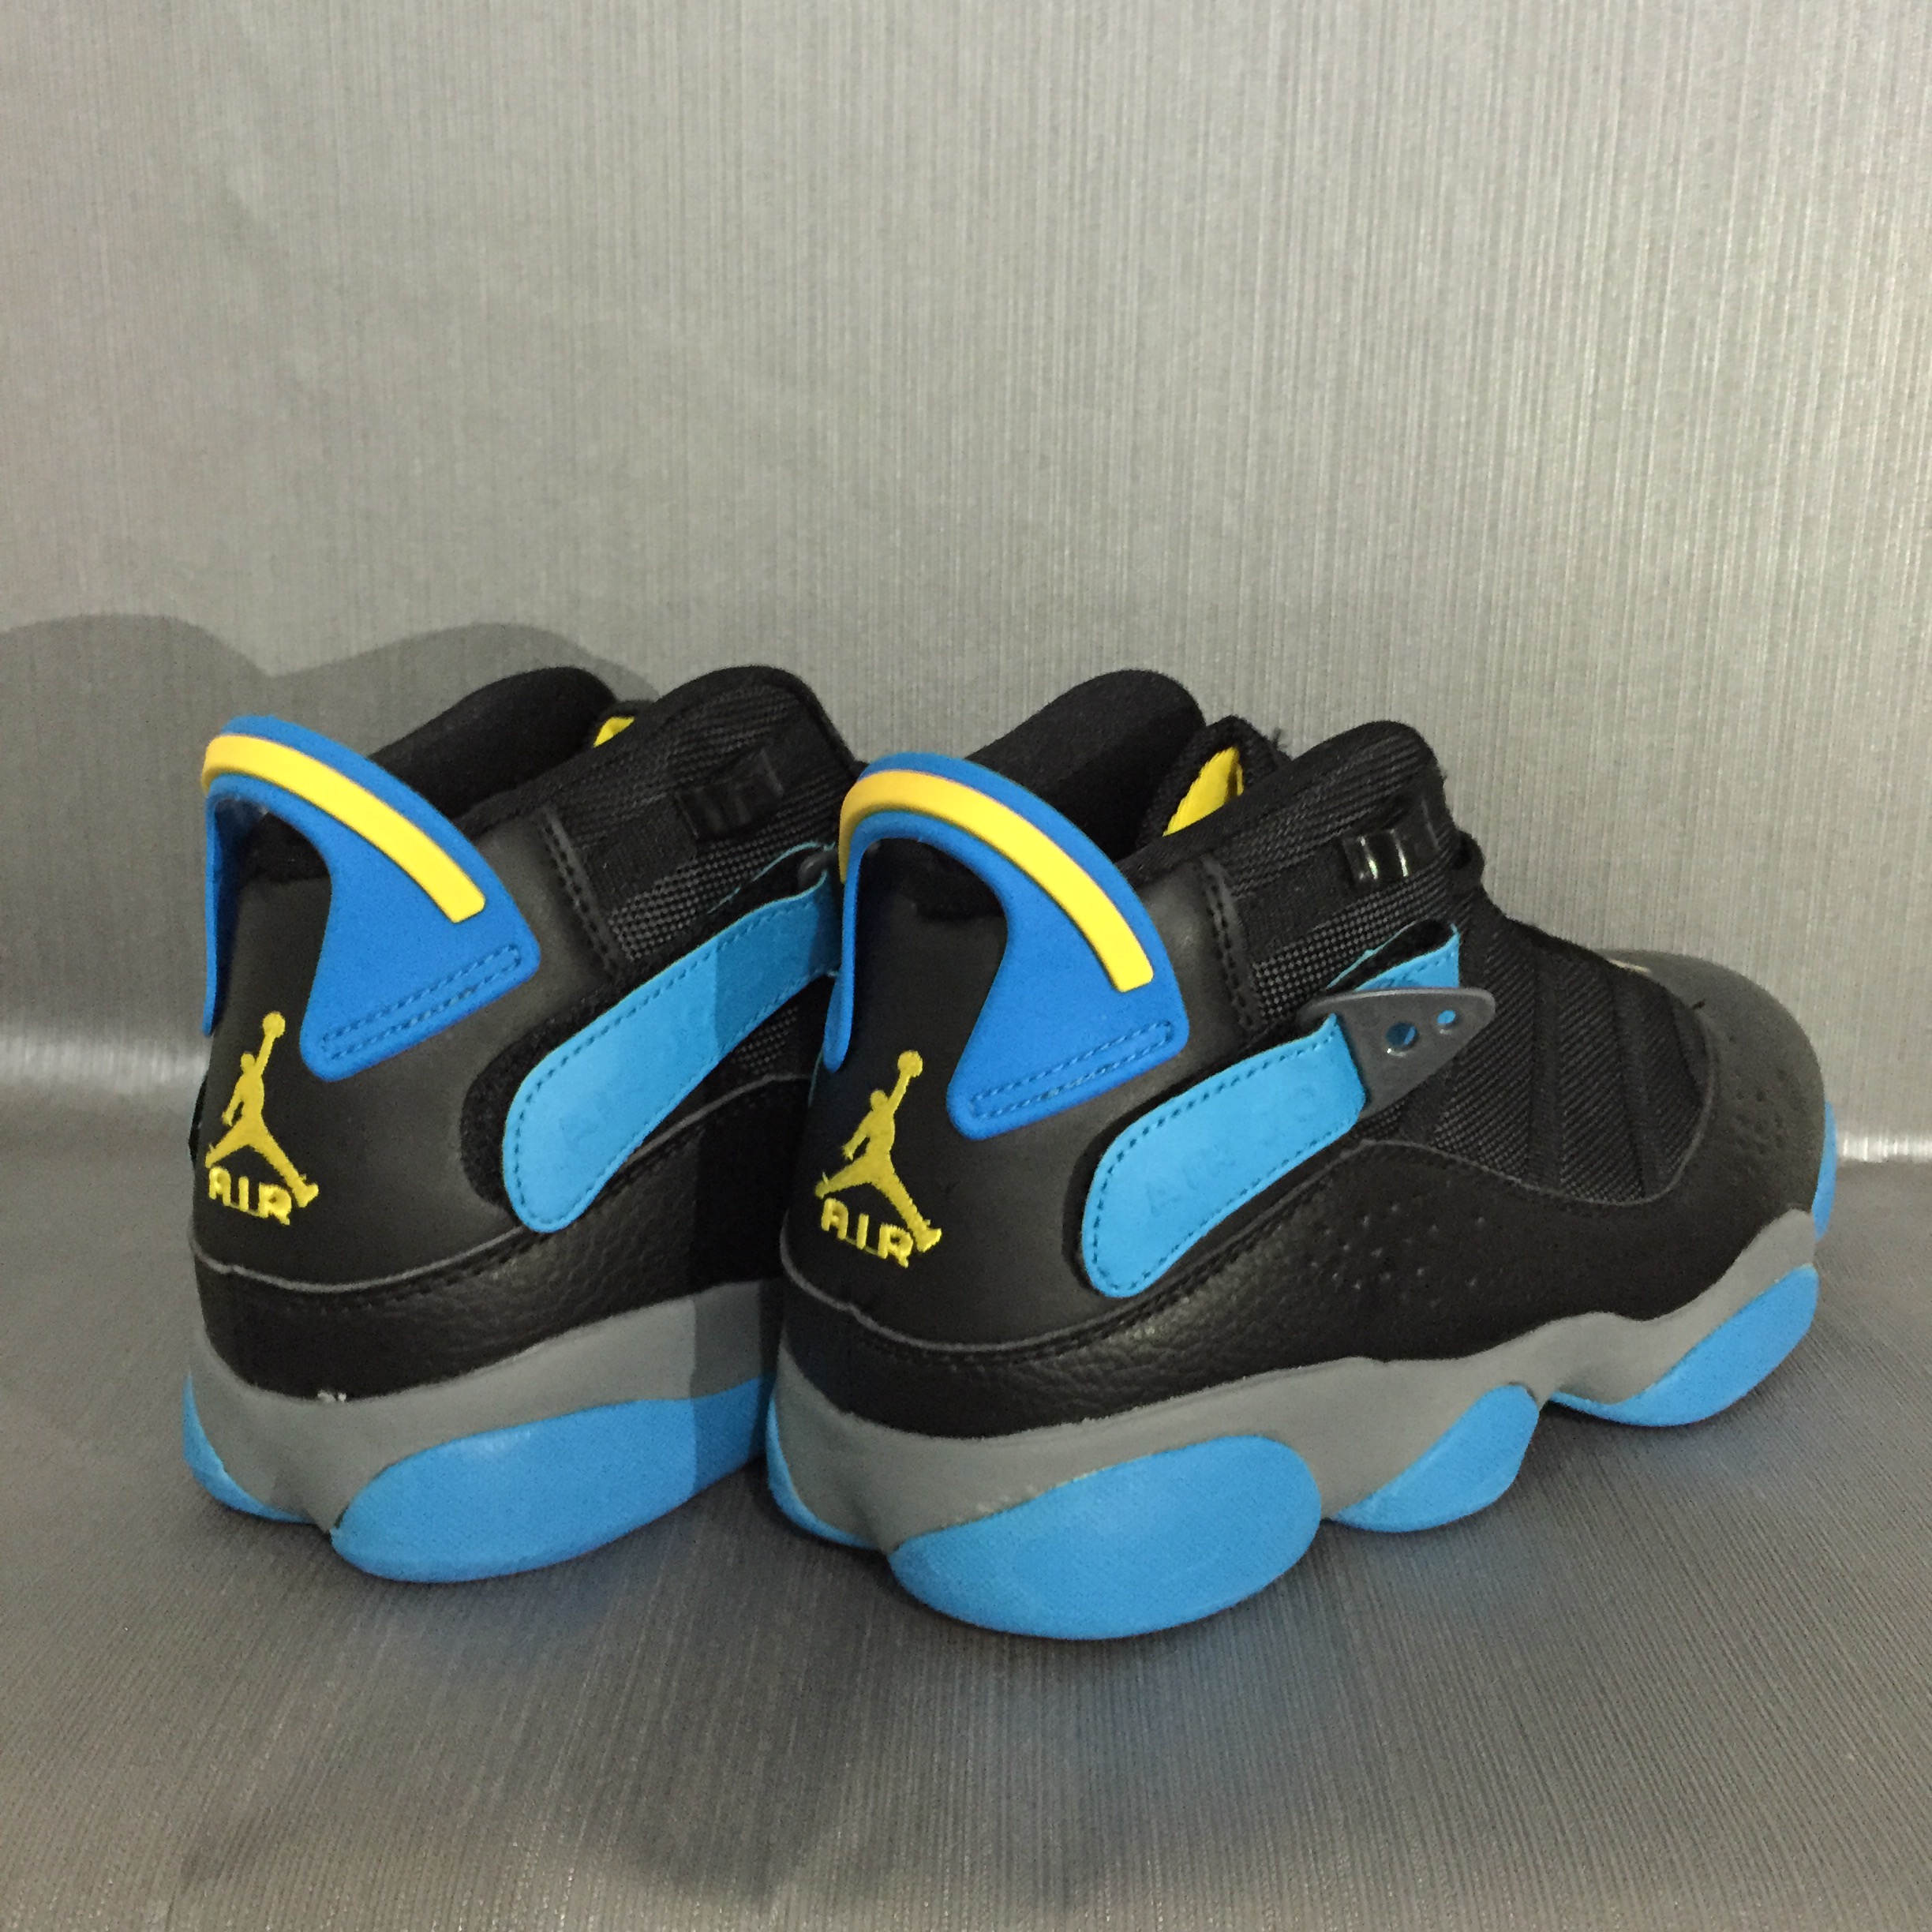 2017 Air Jordan 6 Rings Black Blue Yellow Shoes